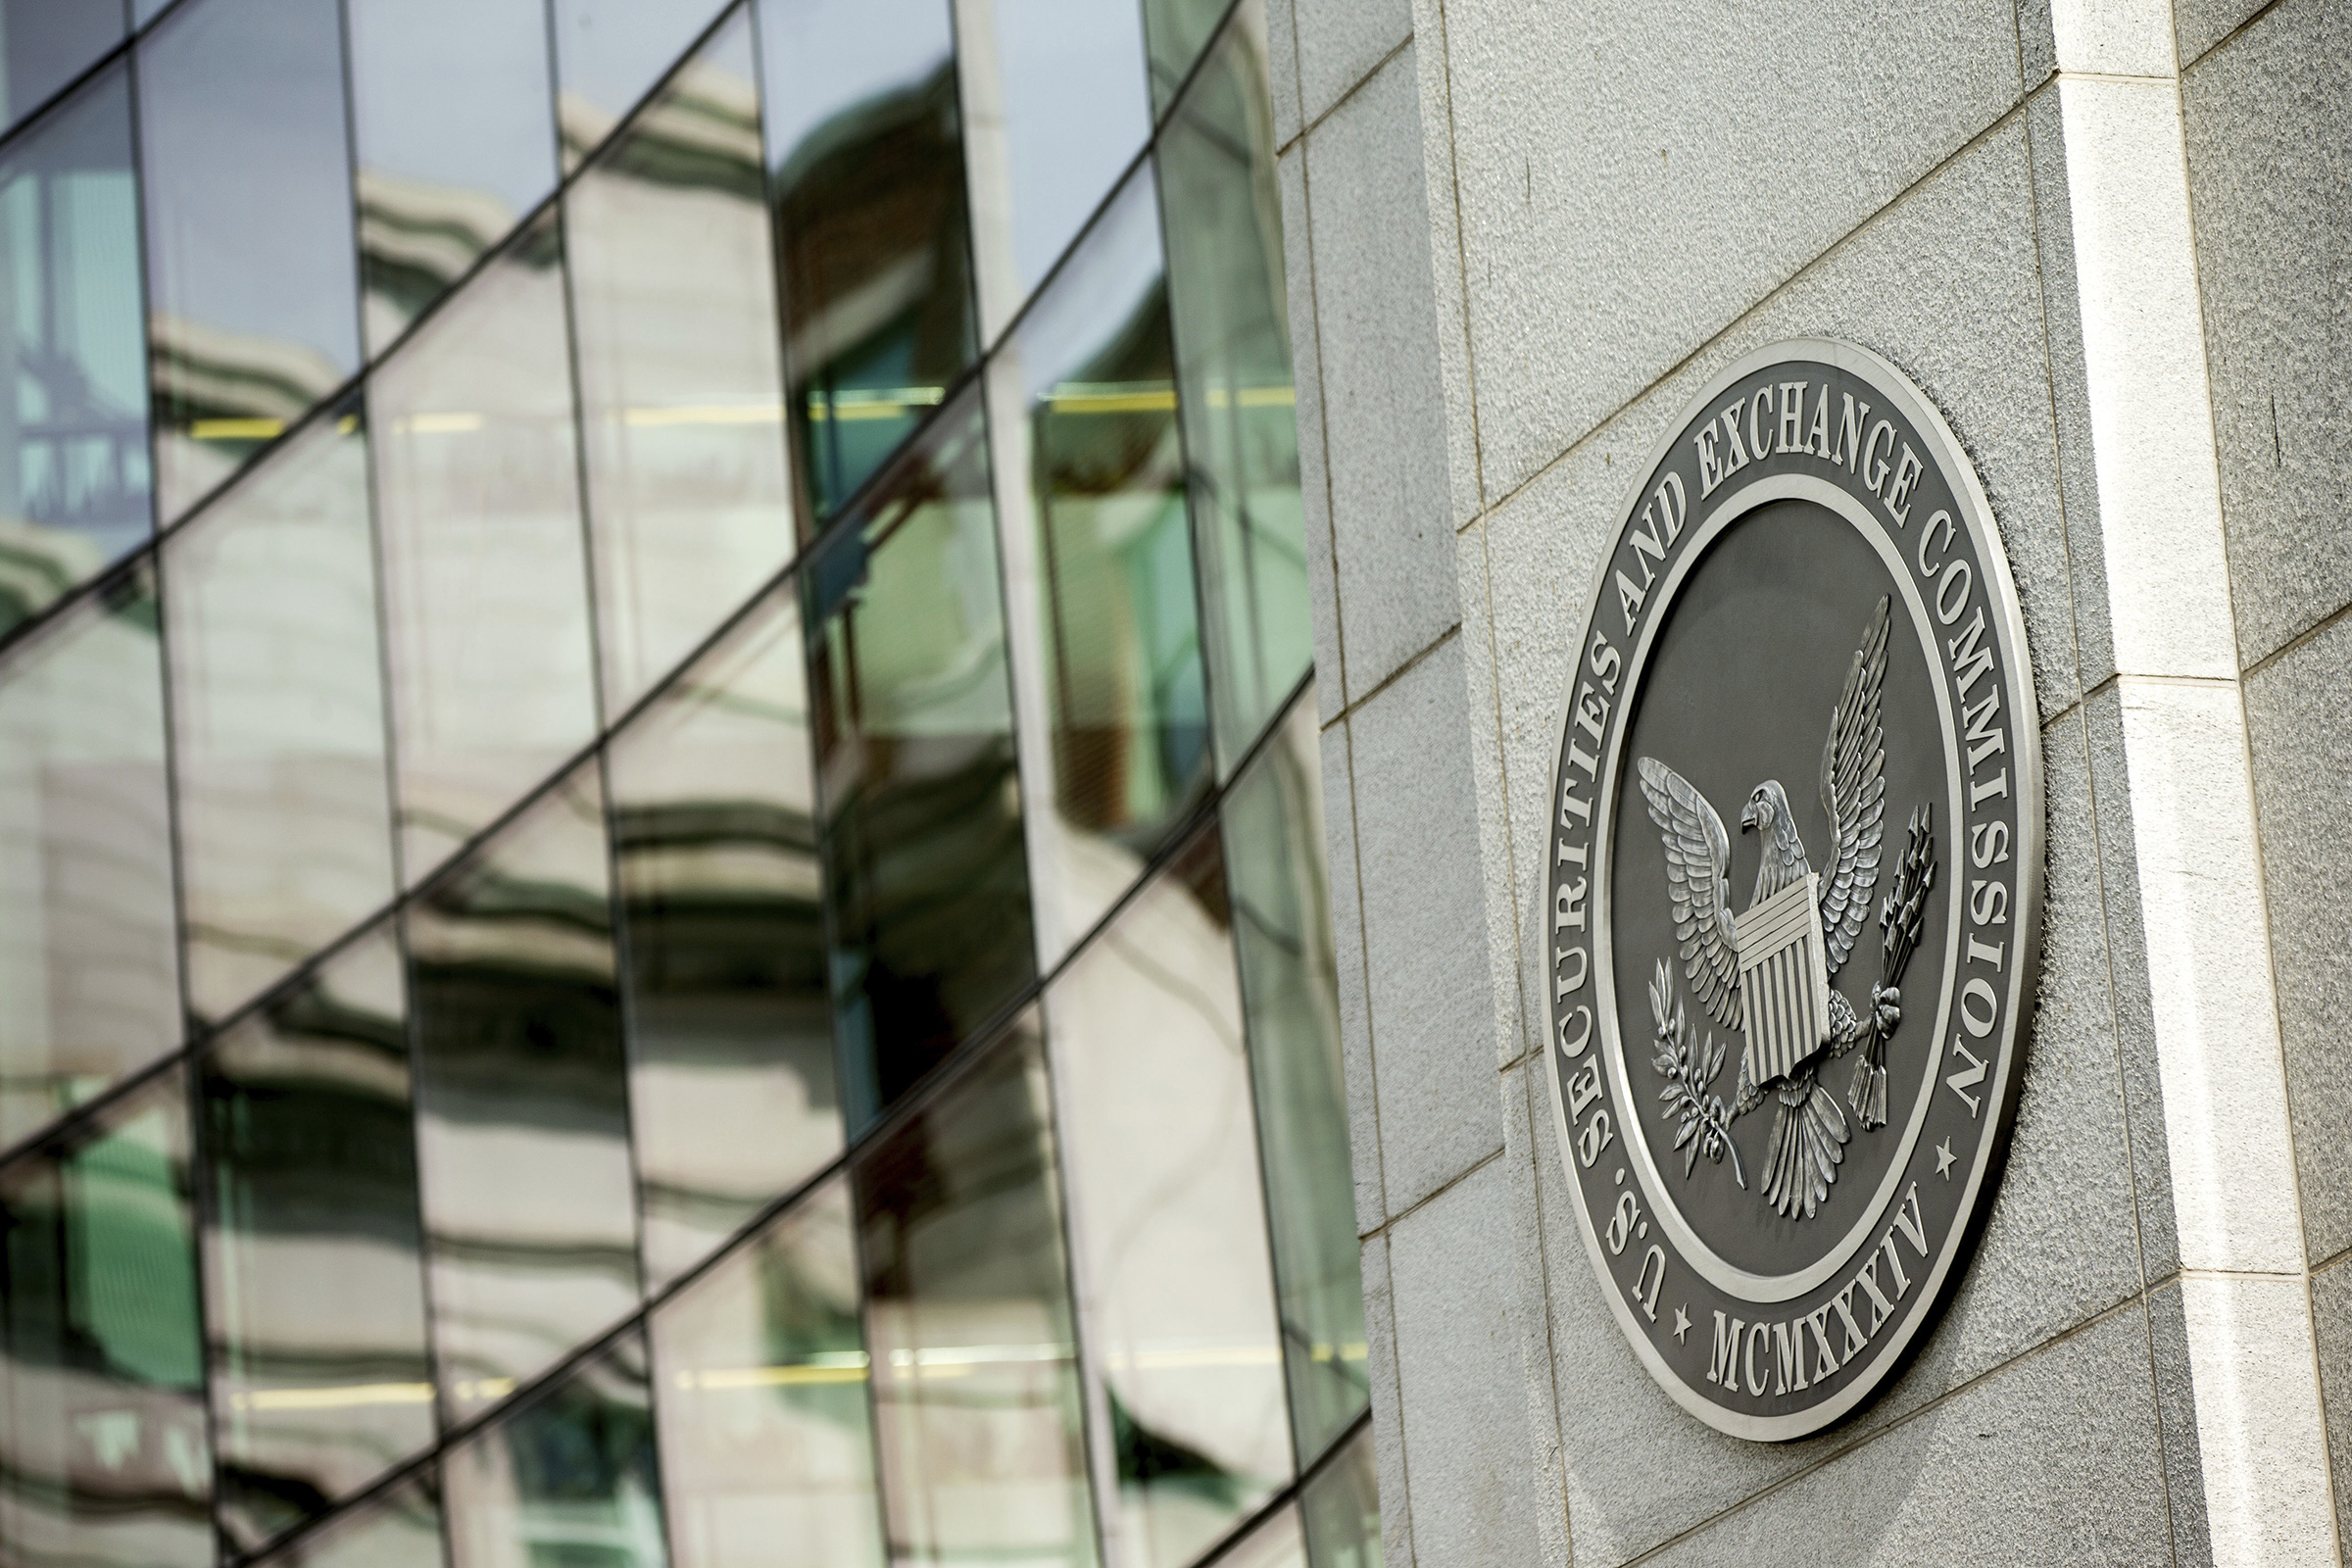 U.S. Securities and Exchange Commission building, in Washington, D.C., June 19, 2015.